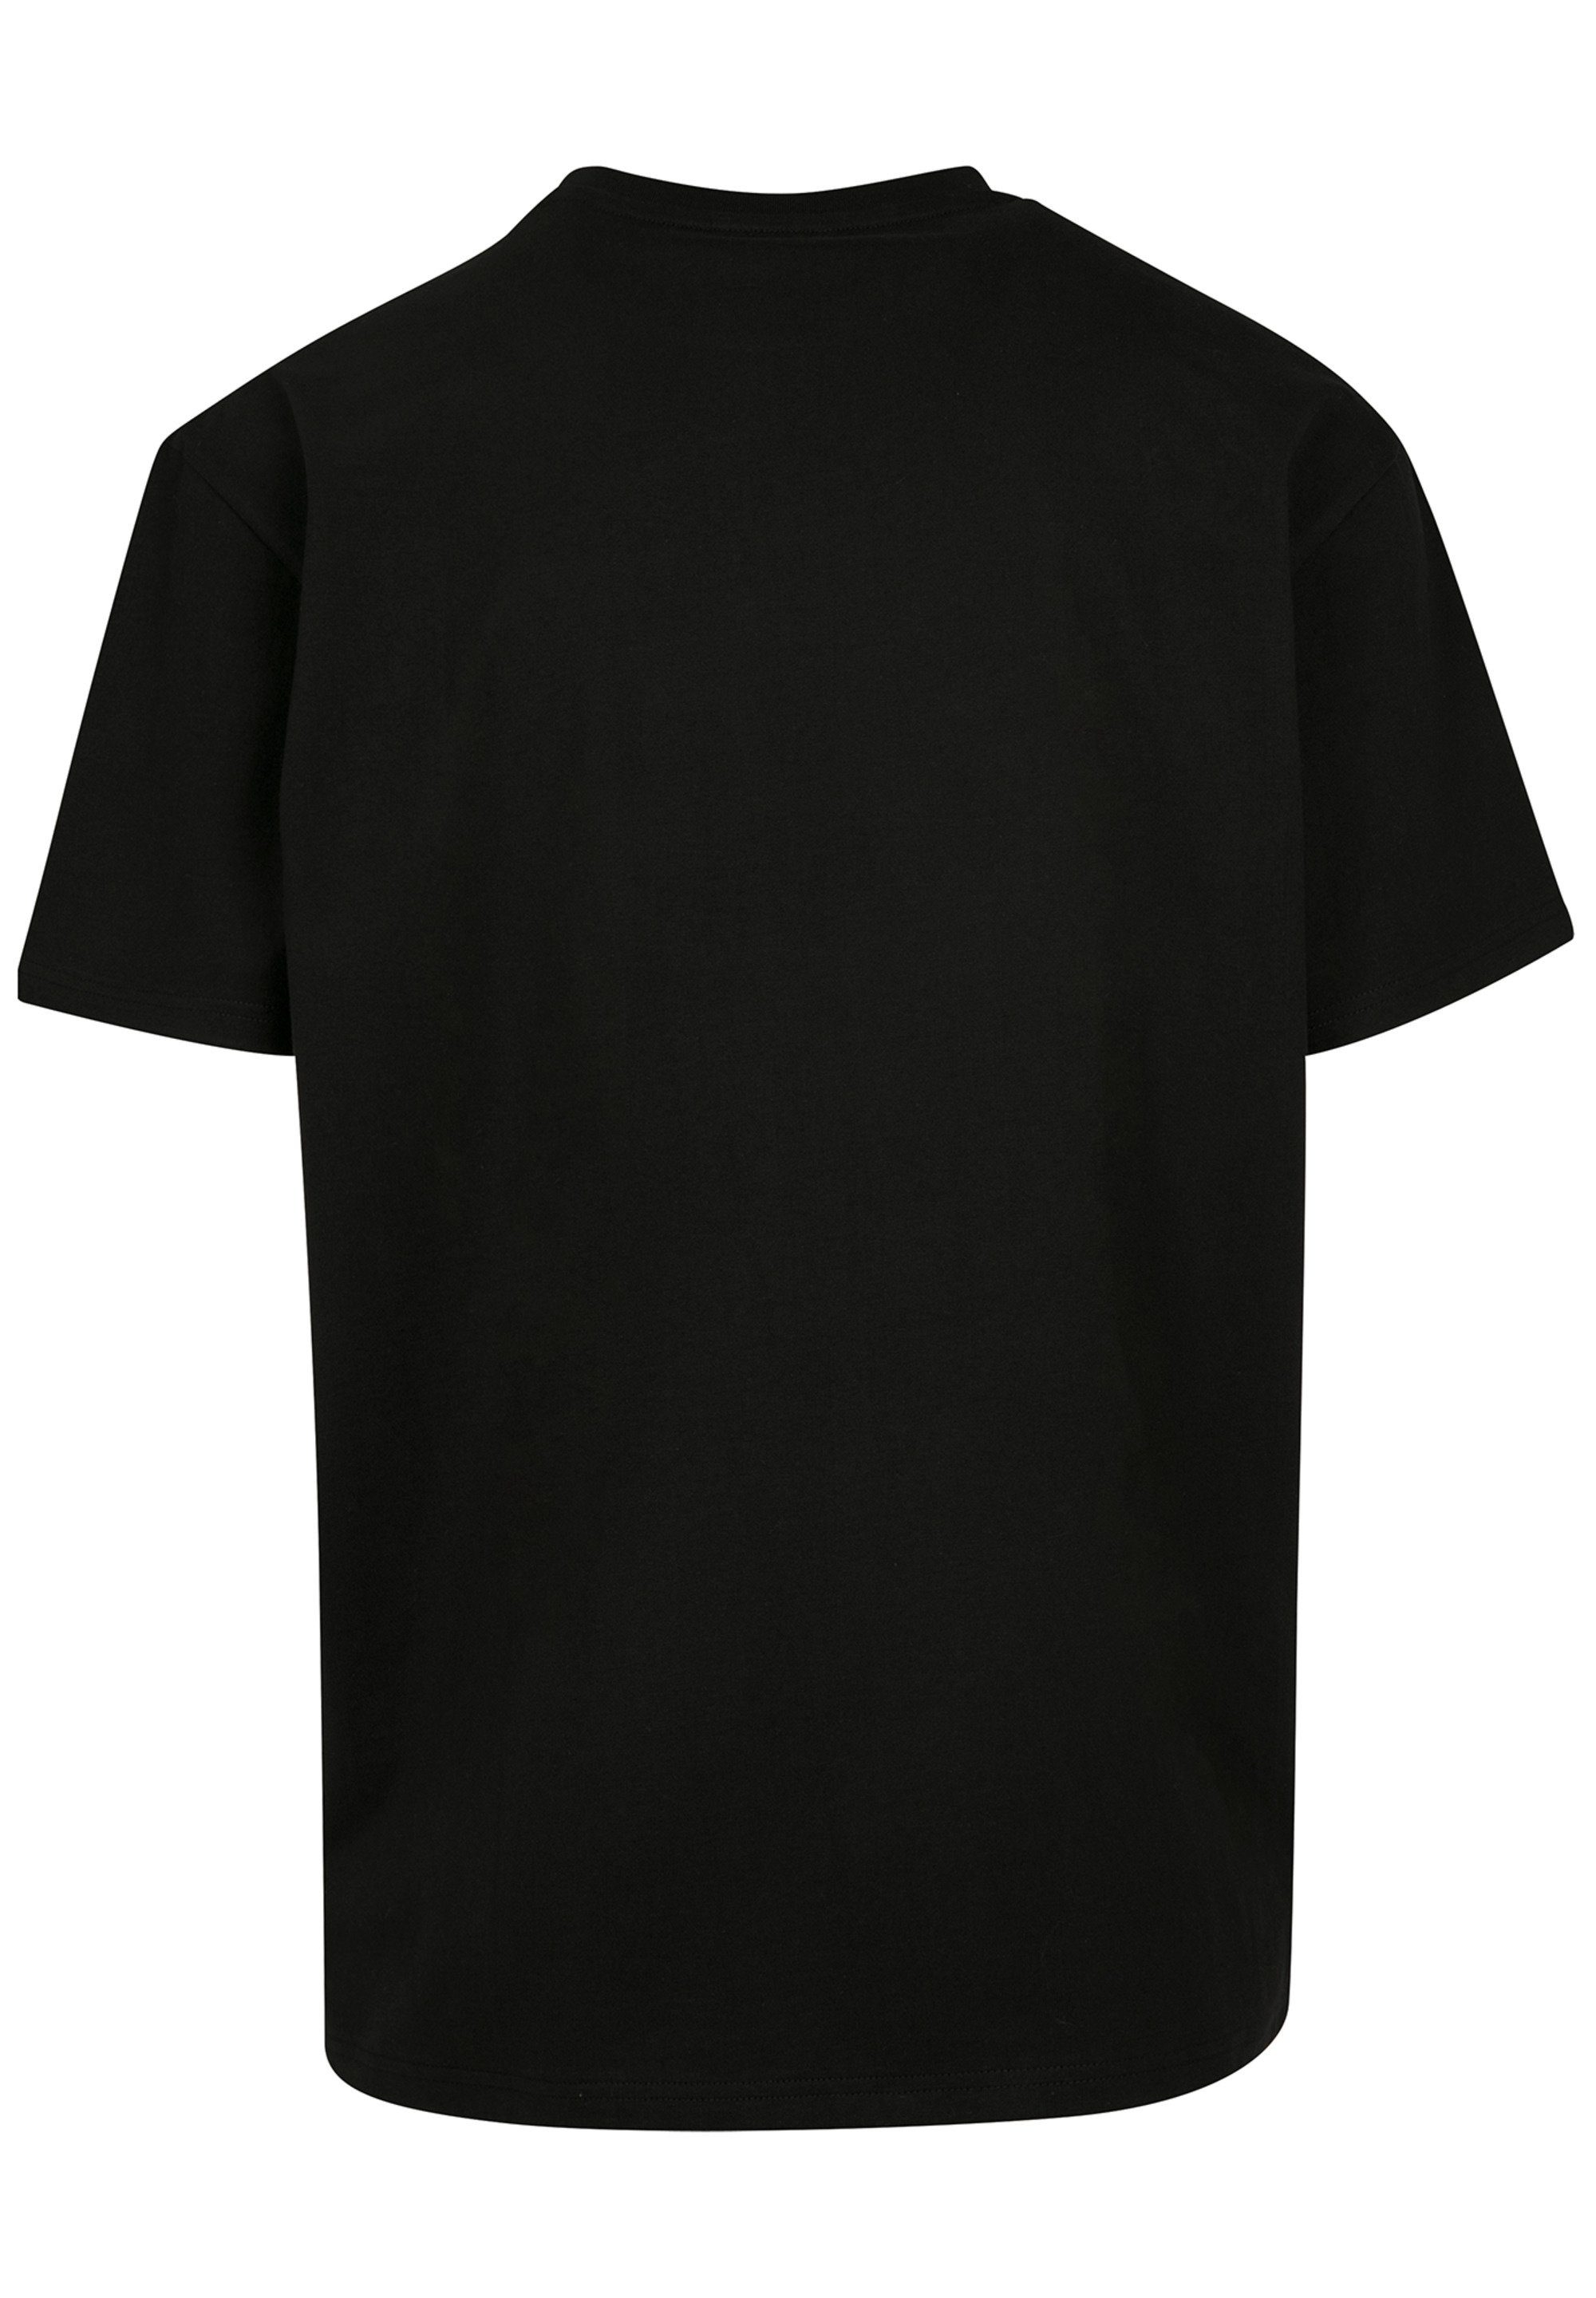 F4NT4STIC ACDC Black schwarz Ice Print Rock Band T-Shirt